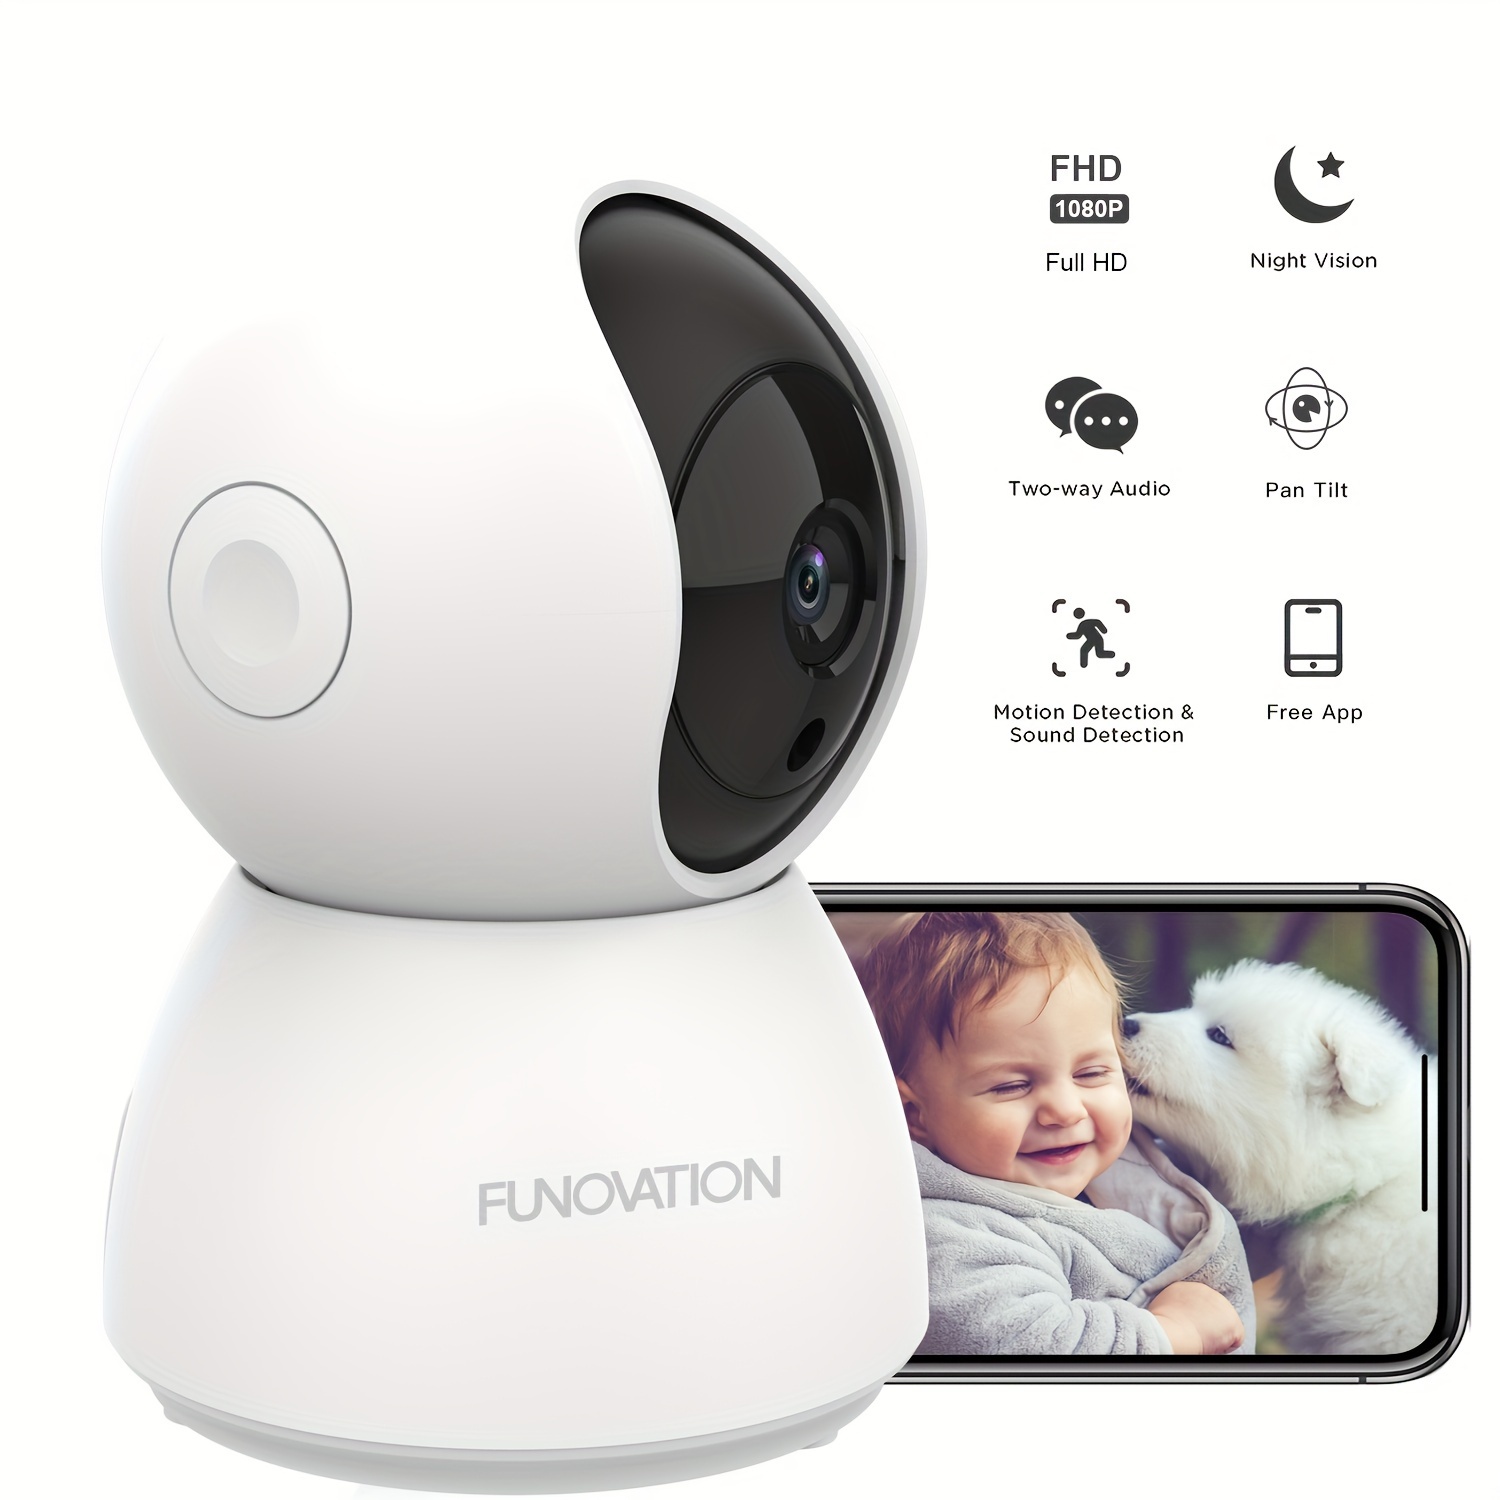  Xiaomi Mi 360° Home Security Camera 2K, Mi Smart IP Camera 2K  360 Angle Video CCTV WiFi Night Vision Wireless Webcam Surveillance Camera  Baby Monitor, White